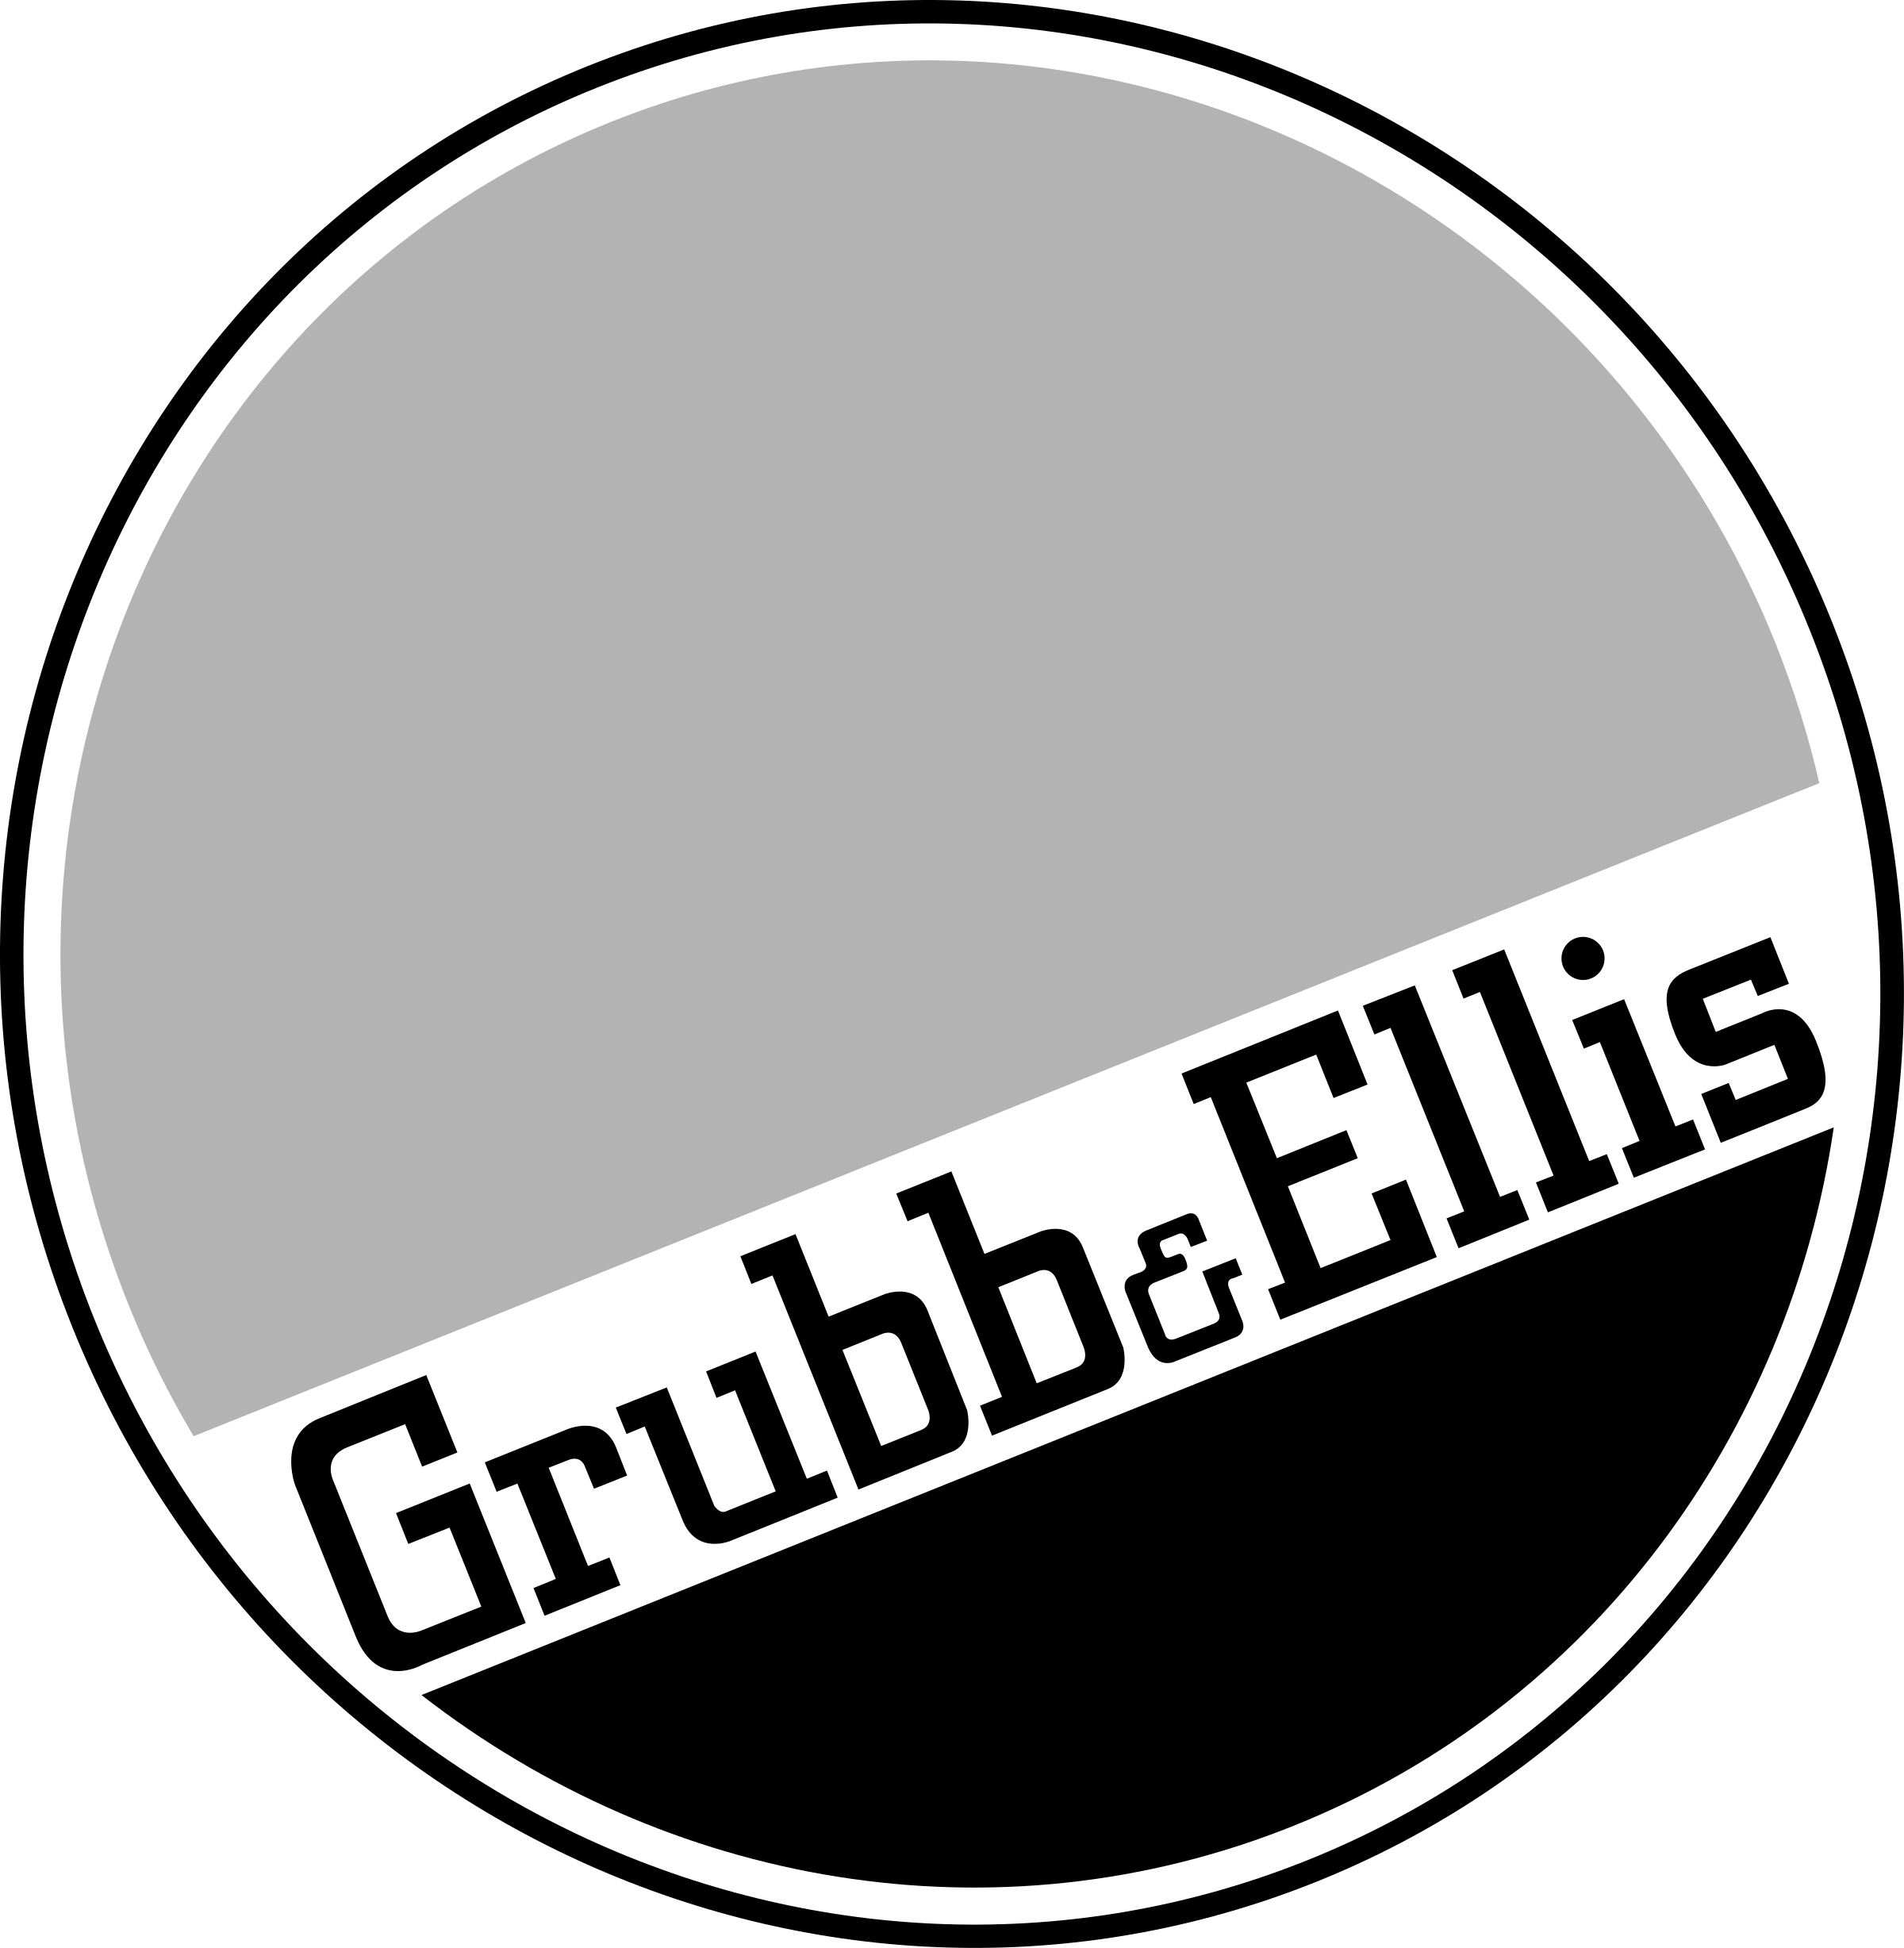 Ellis Logo - Grubb & Ellis Logo PNG Transparent & SVG Vector - Freebie Supply